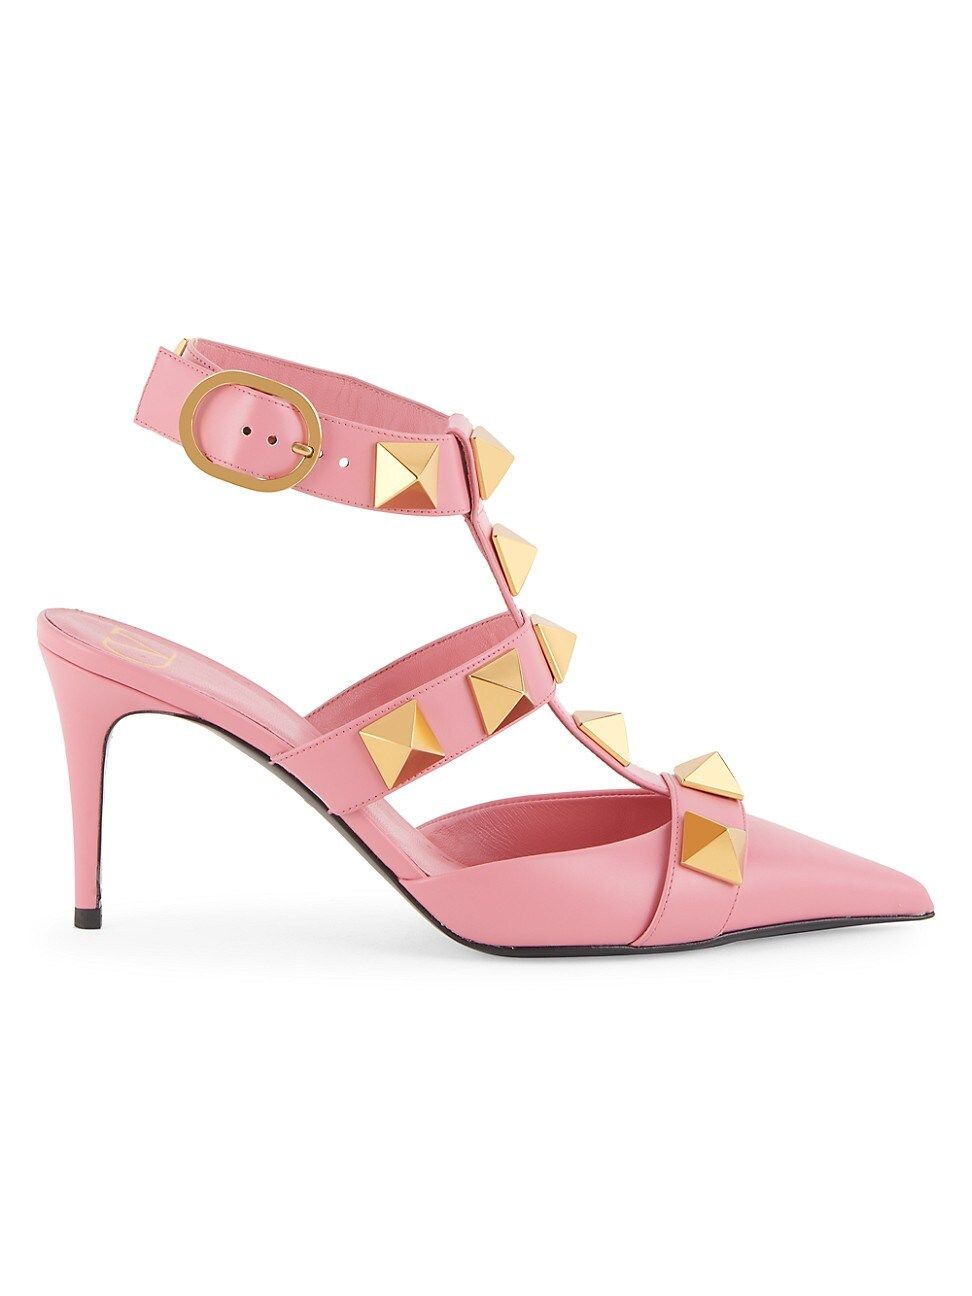 Valentino Women's Valentino Garavani Roman Stud Ankle-Cuff Leather Pumps - Flamingo Pink - Size 6 | Saks Fifth Avenue